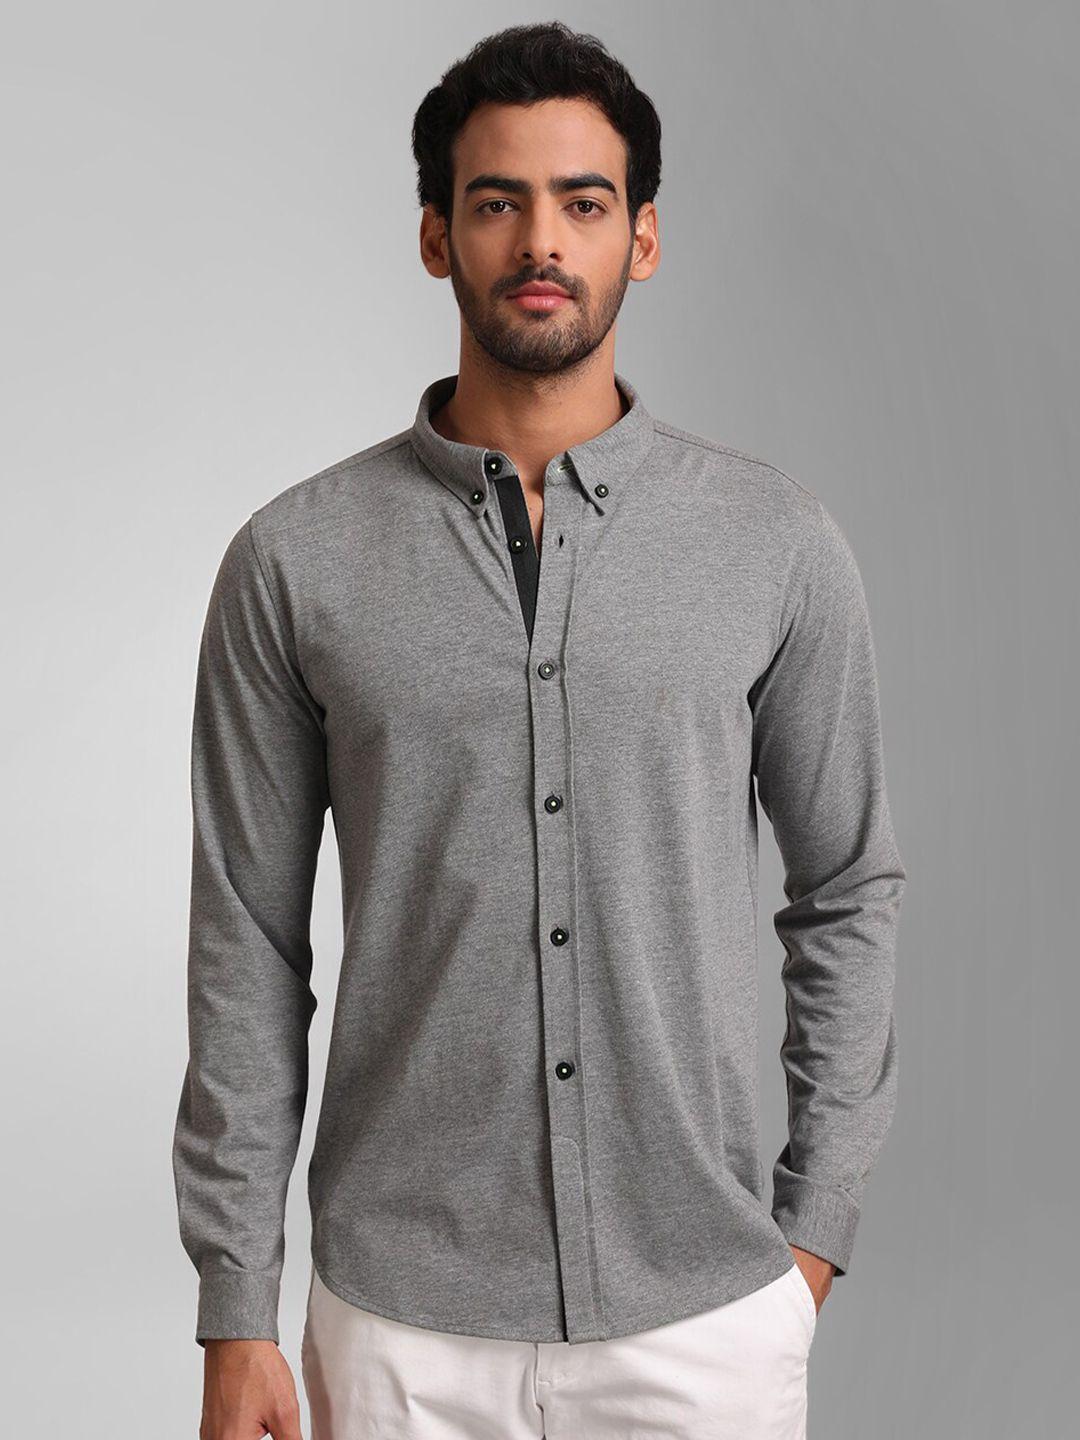 kz07 by kazo button-down collar regular fit cotton casual shirt